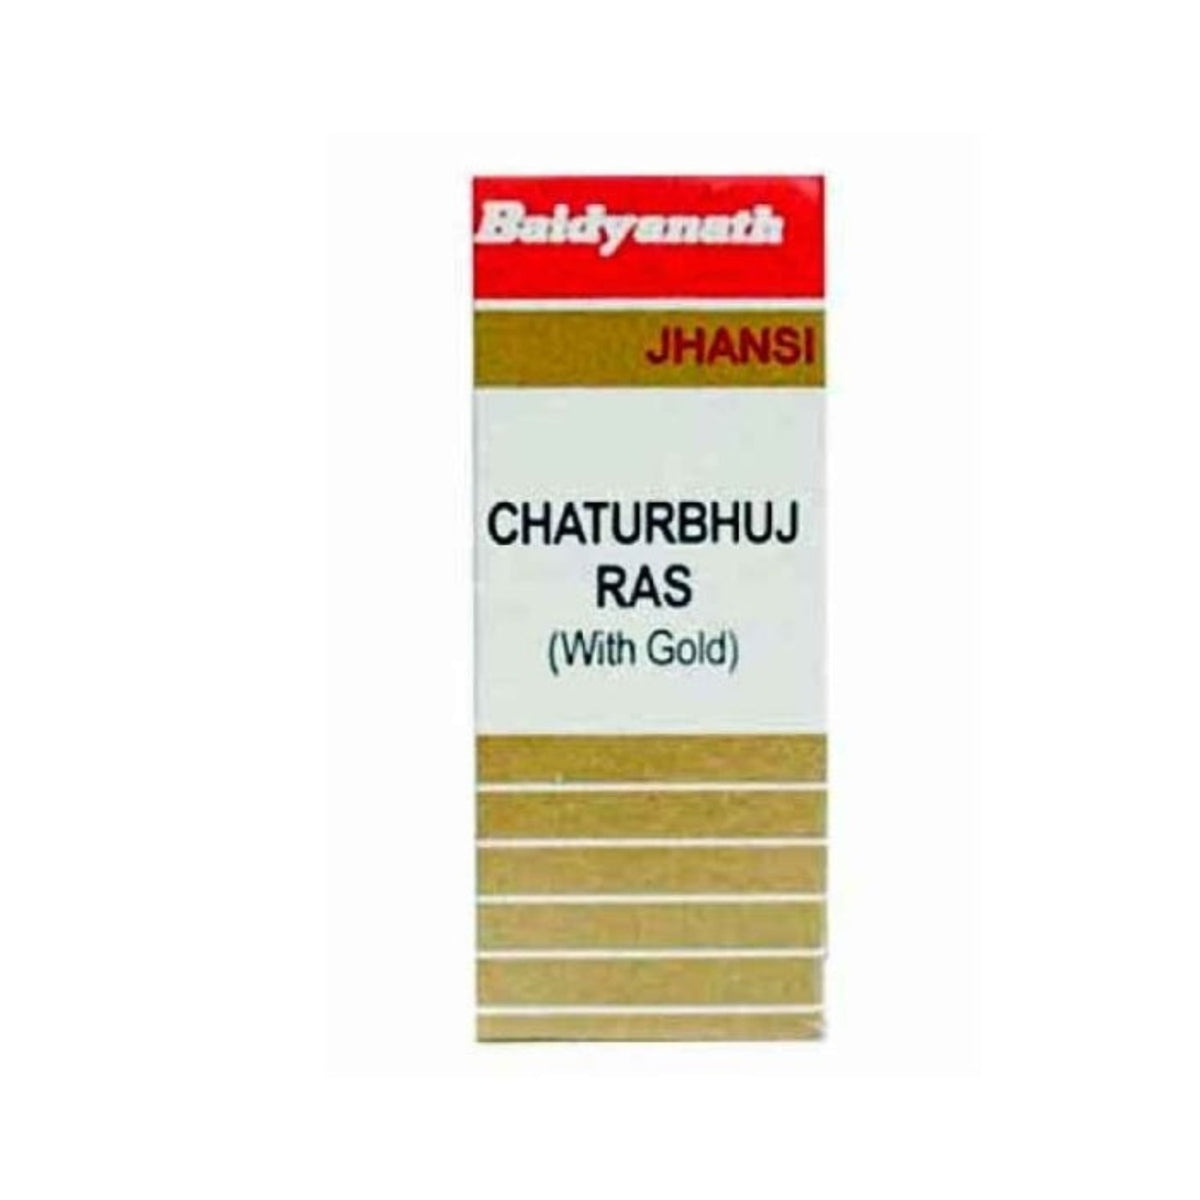 Baidyanath Ayurvedic (Jhansi) Chaturbhuj Ras with Gold Powder